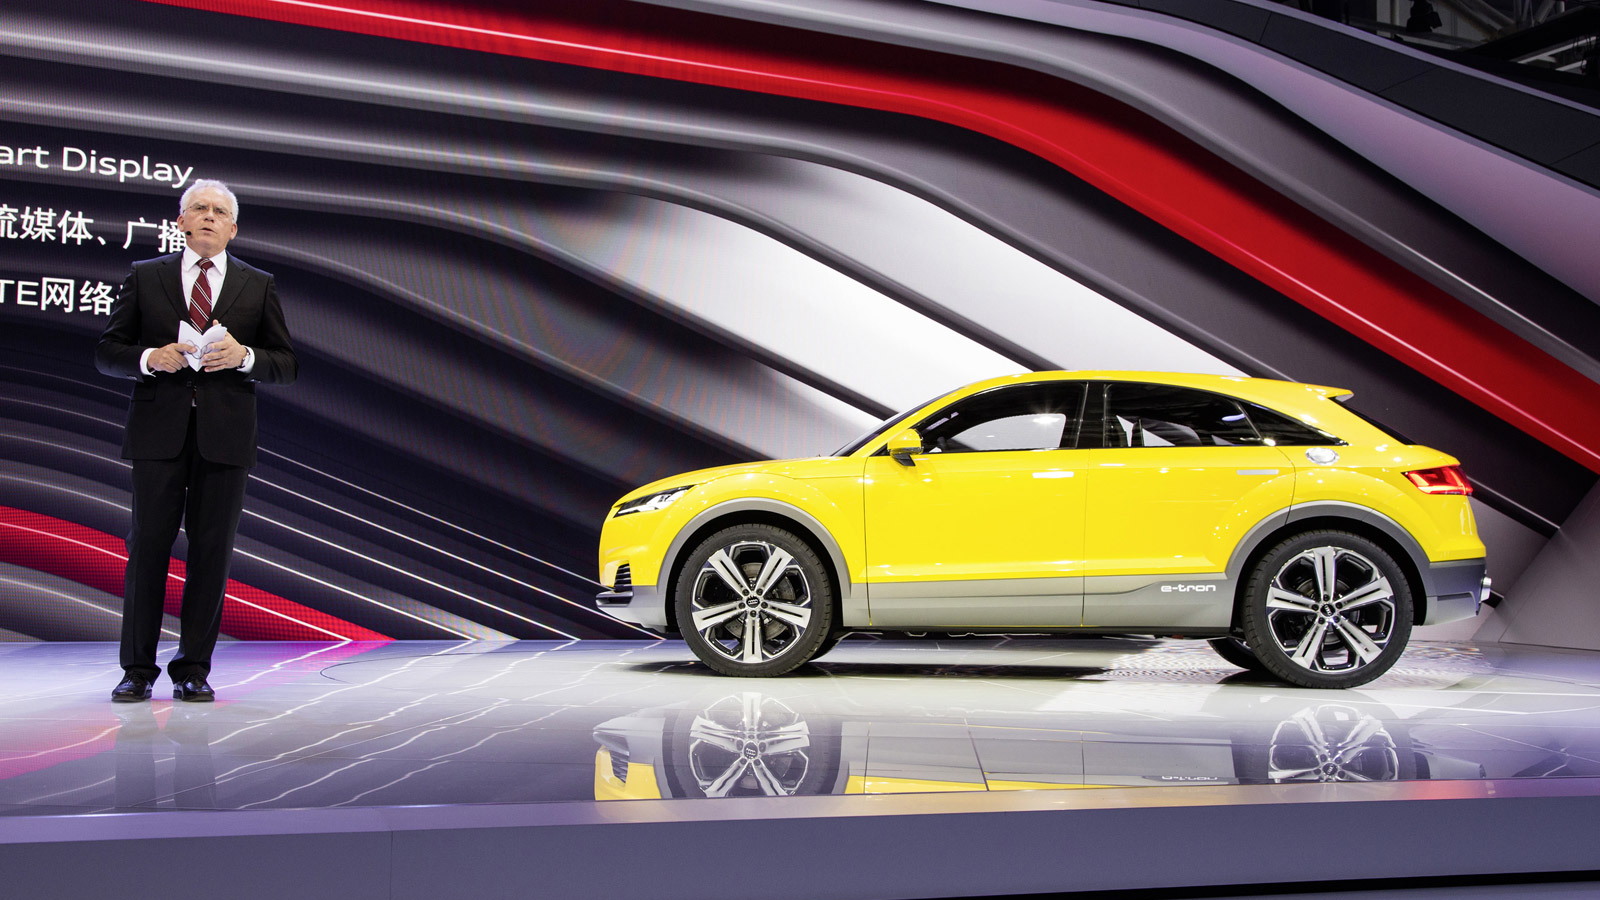 Audi TT Offroad concept, 2014 Beijing Auto Show